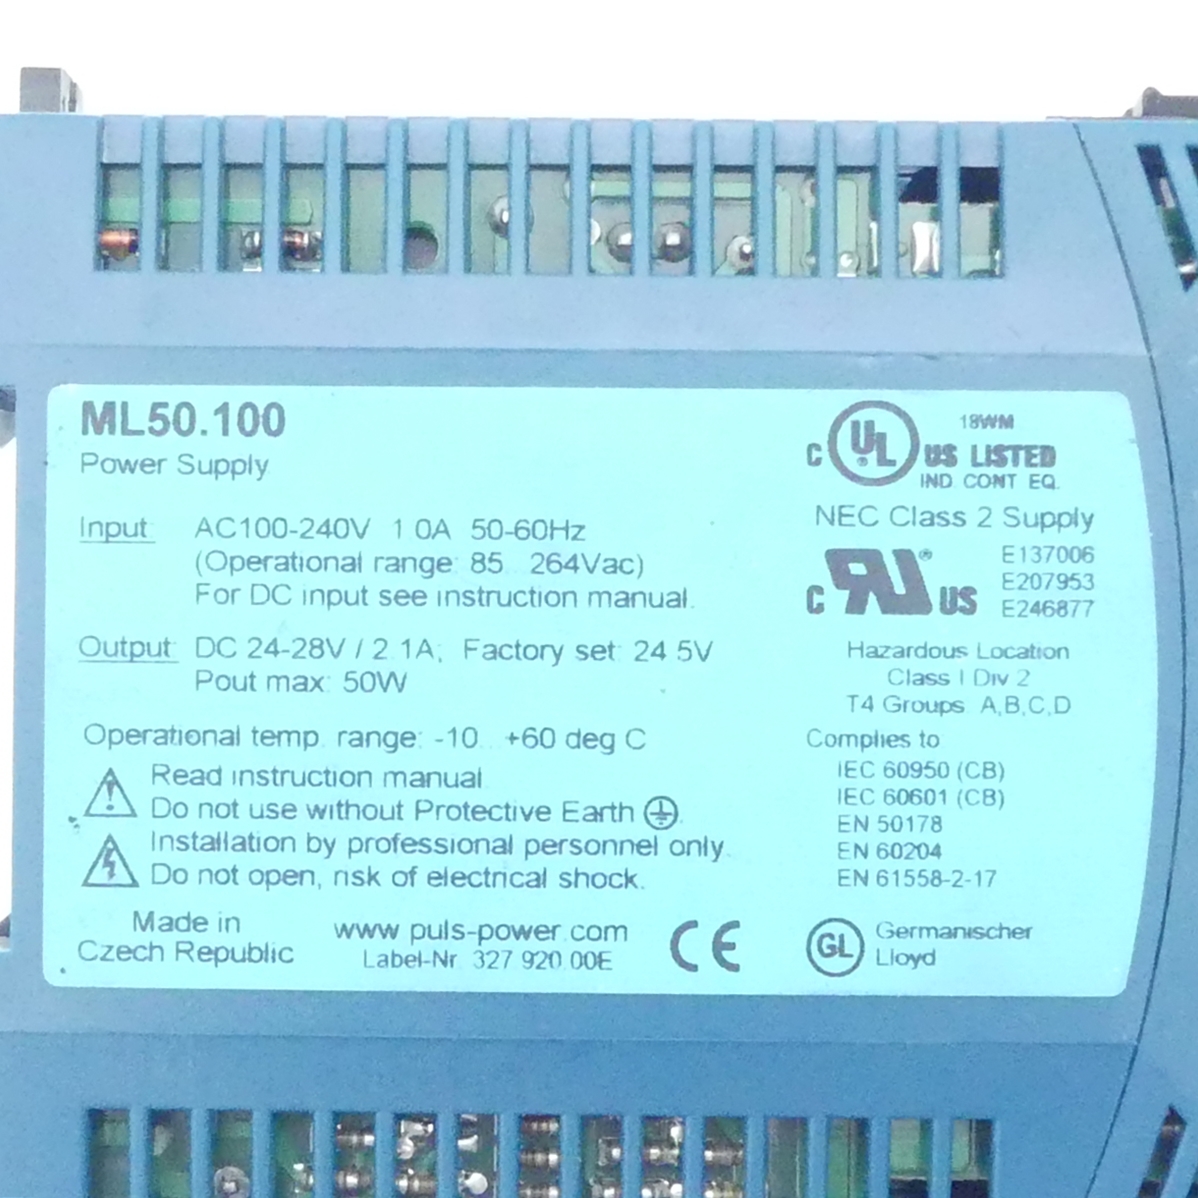 DIN rail power supply ML50.100 